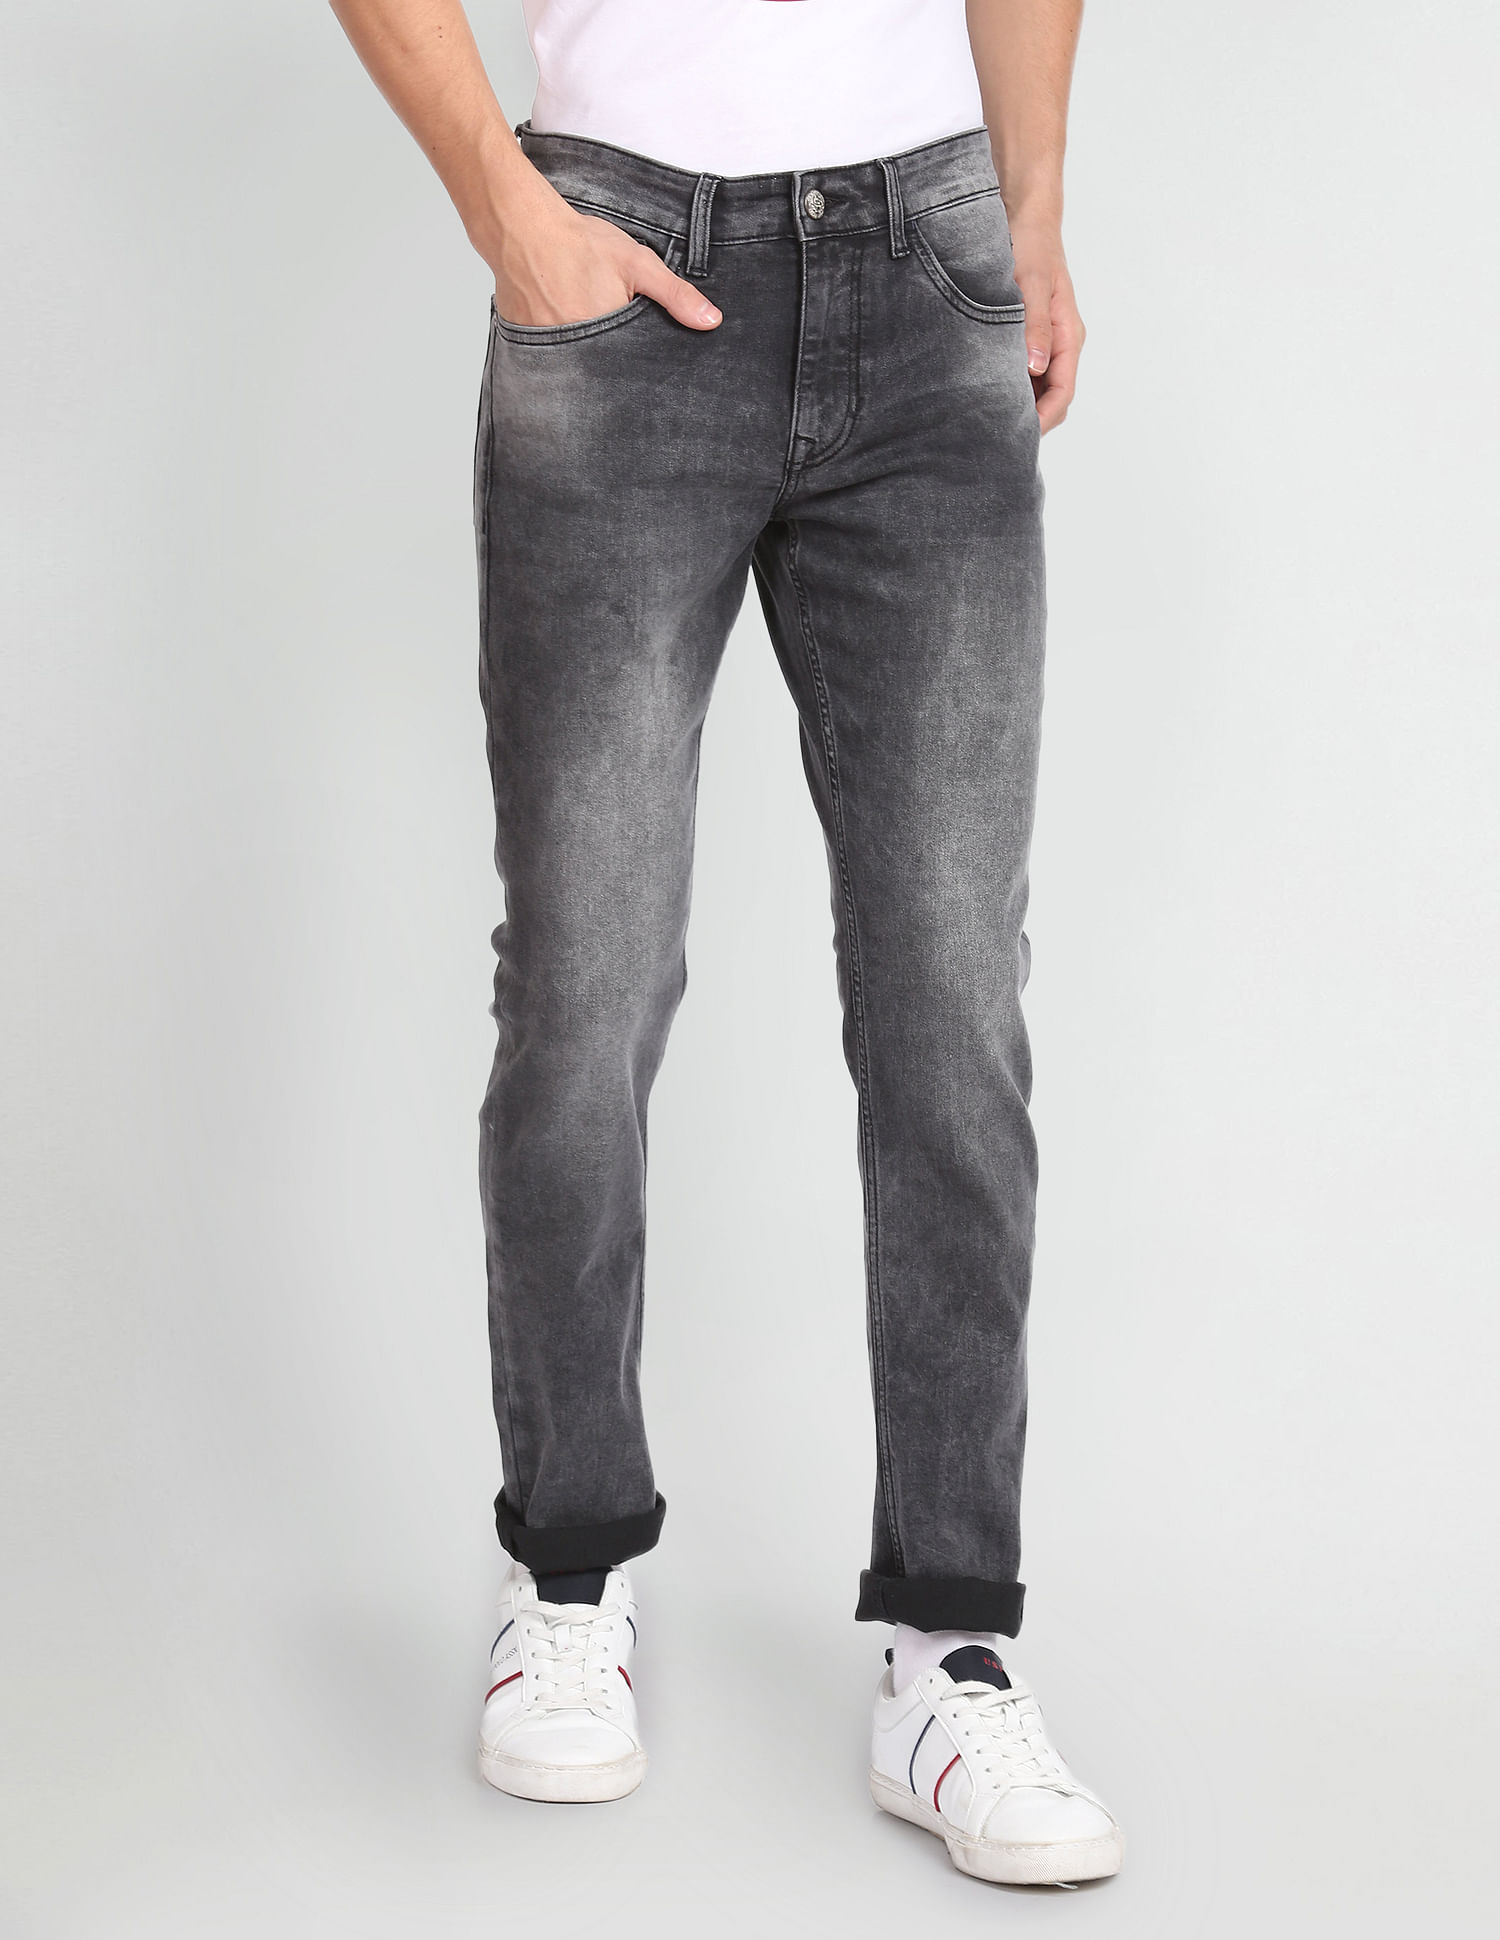 Buy Men Navy Dark Wash Slim Tapered Jeans Online  652210  Peter England